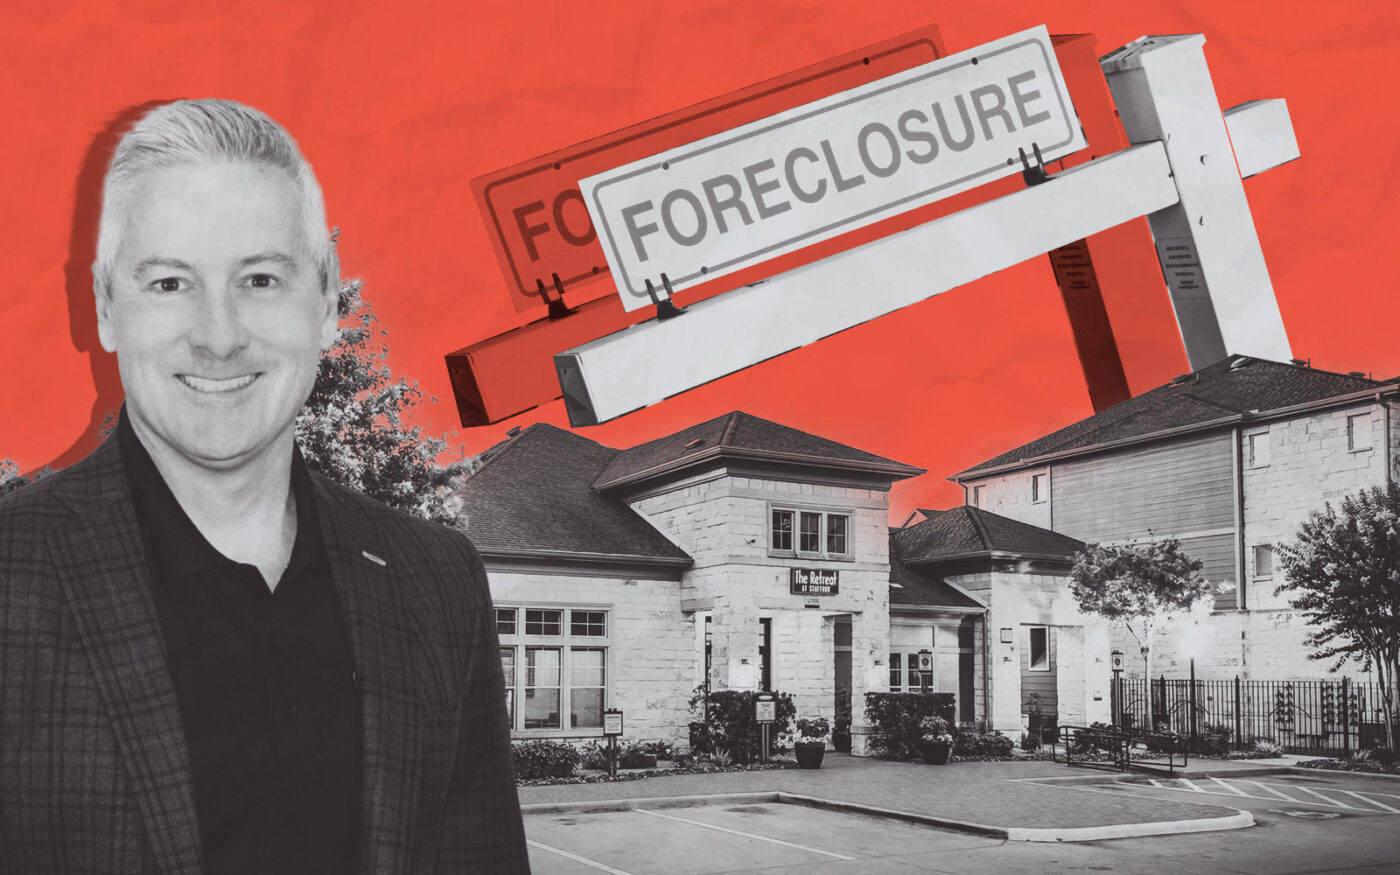 Foreclosure Looms Over Houston Apartment Complex